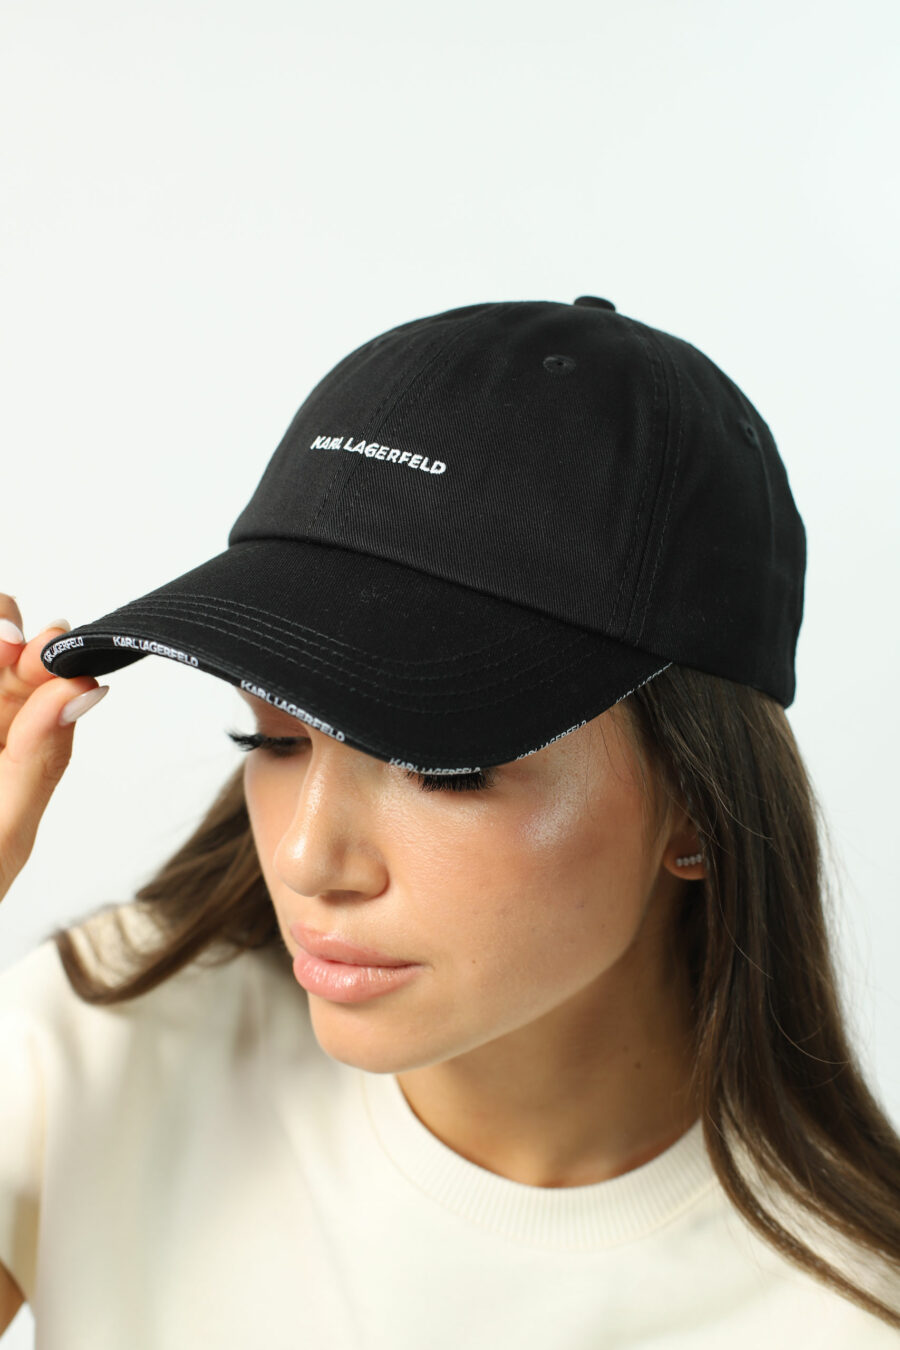 Black cap with logo on visor "essential" - Photos 2758